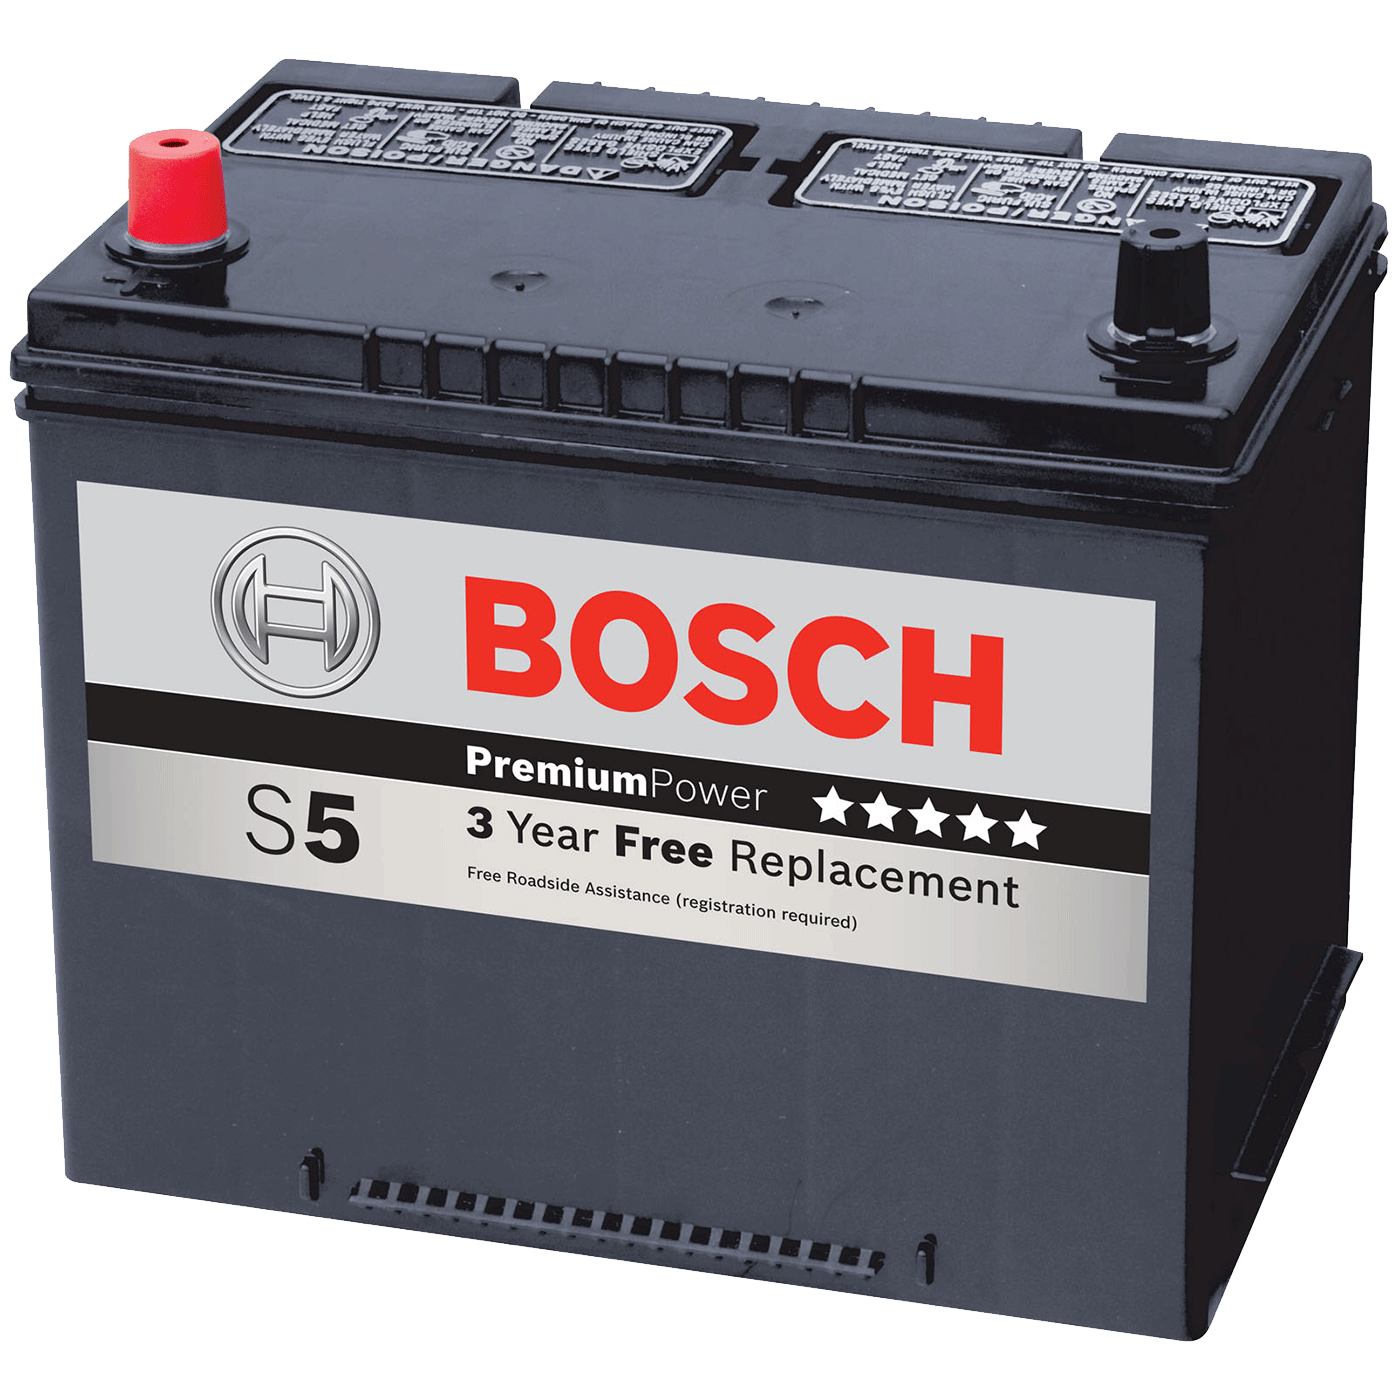 Bosch Automotive Batteries PNG HD Quality